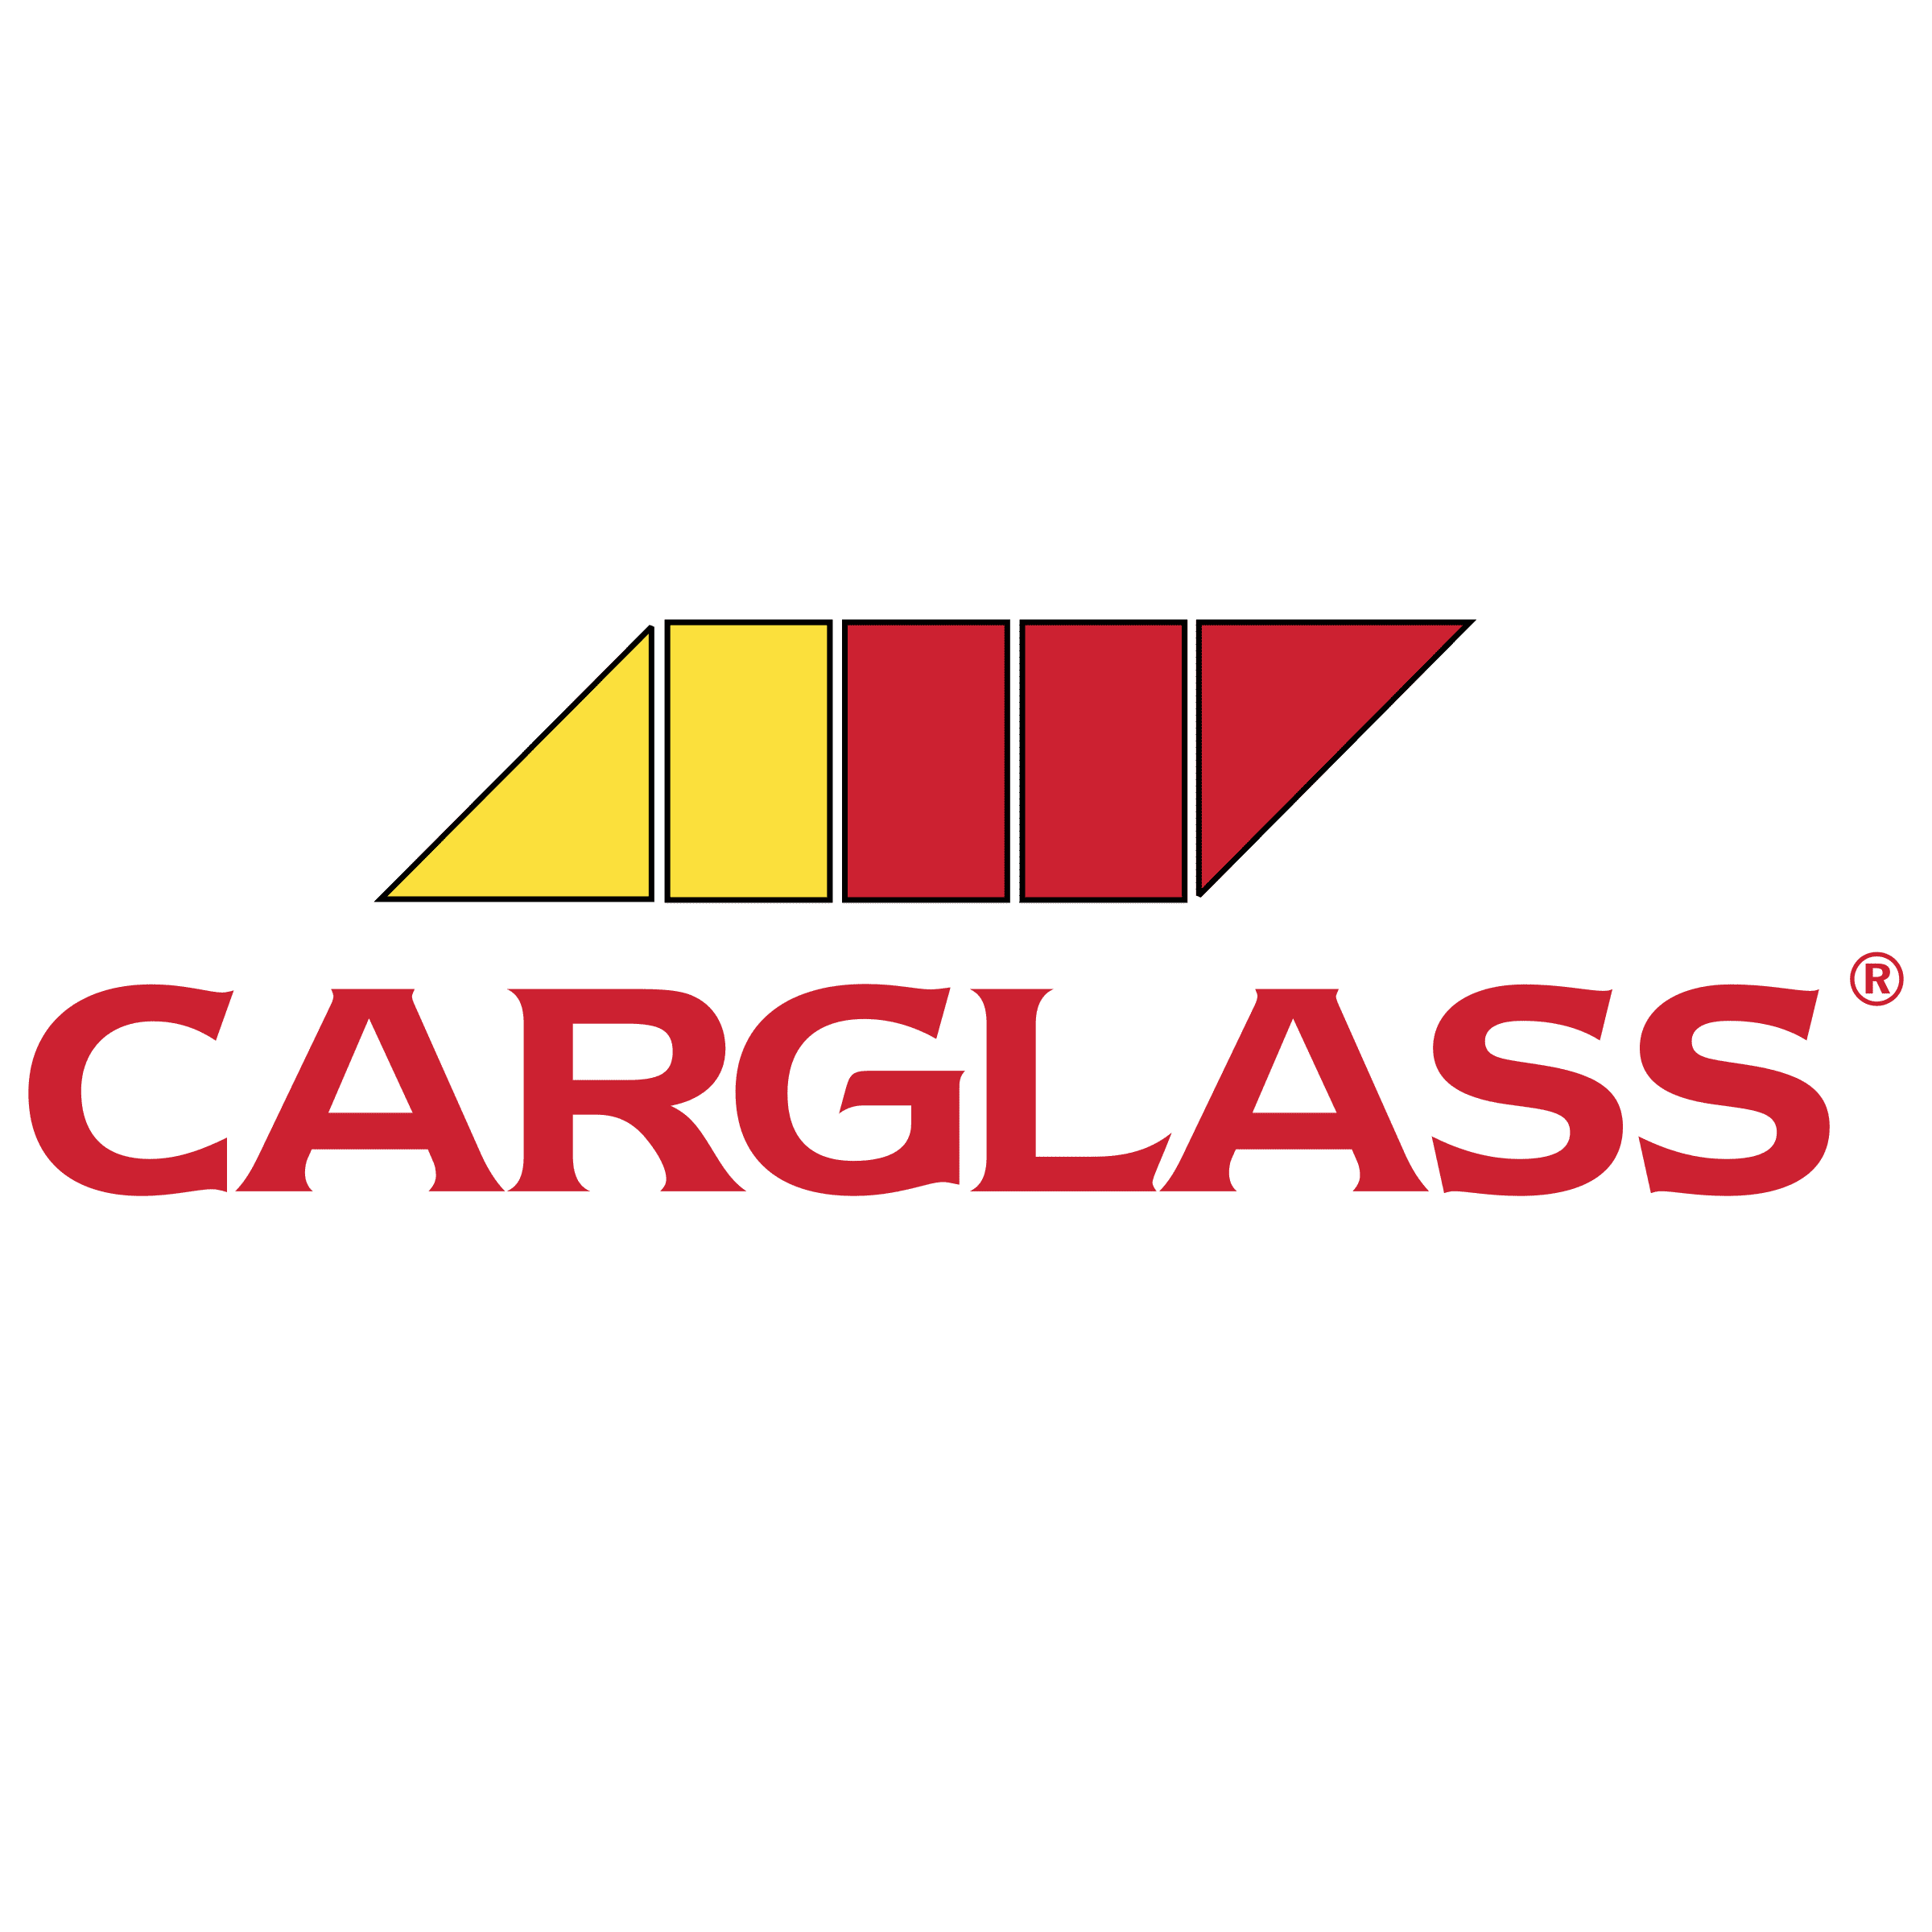 carglass